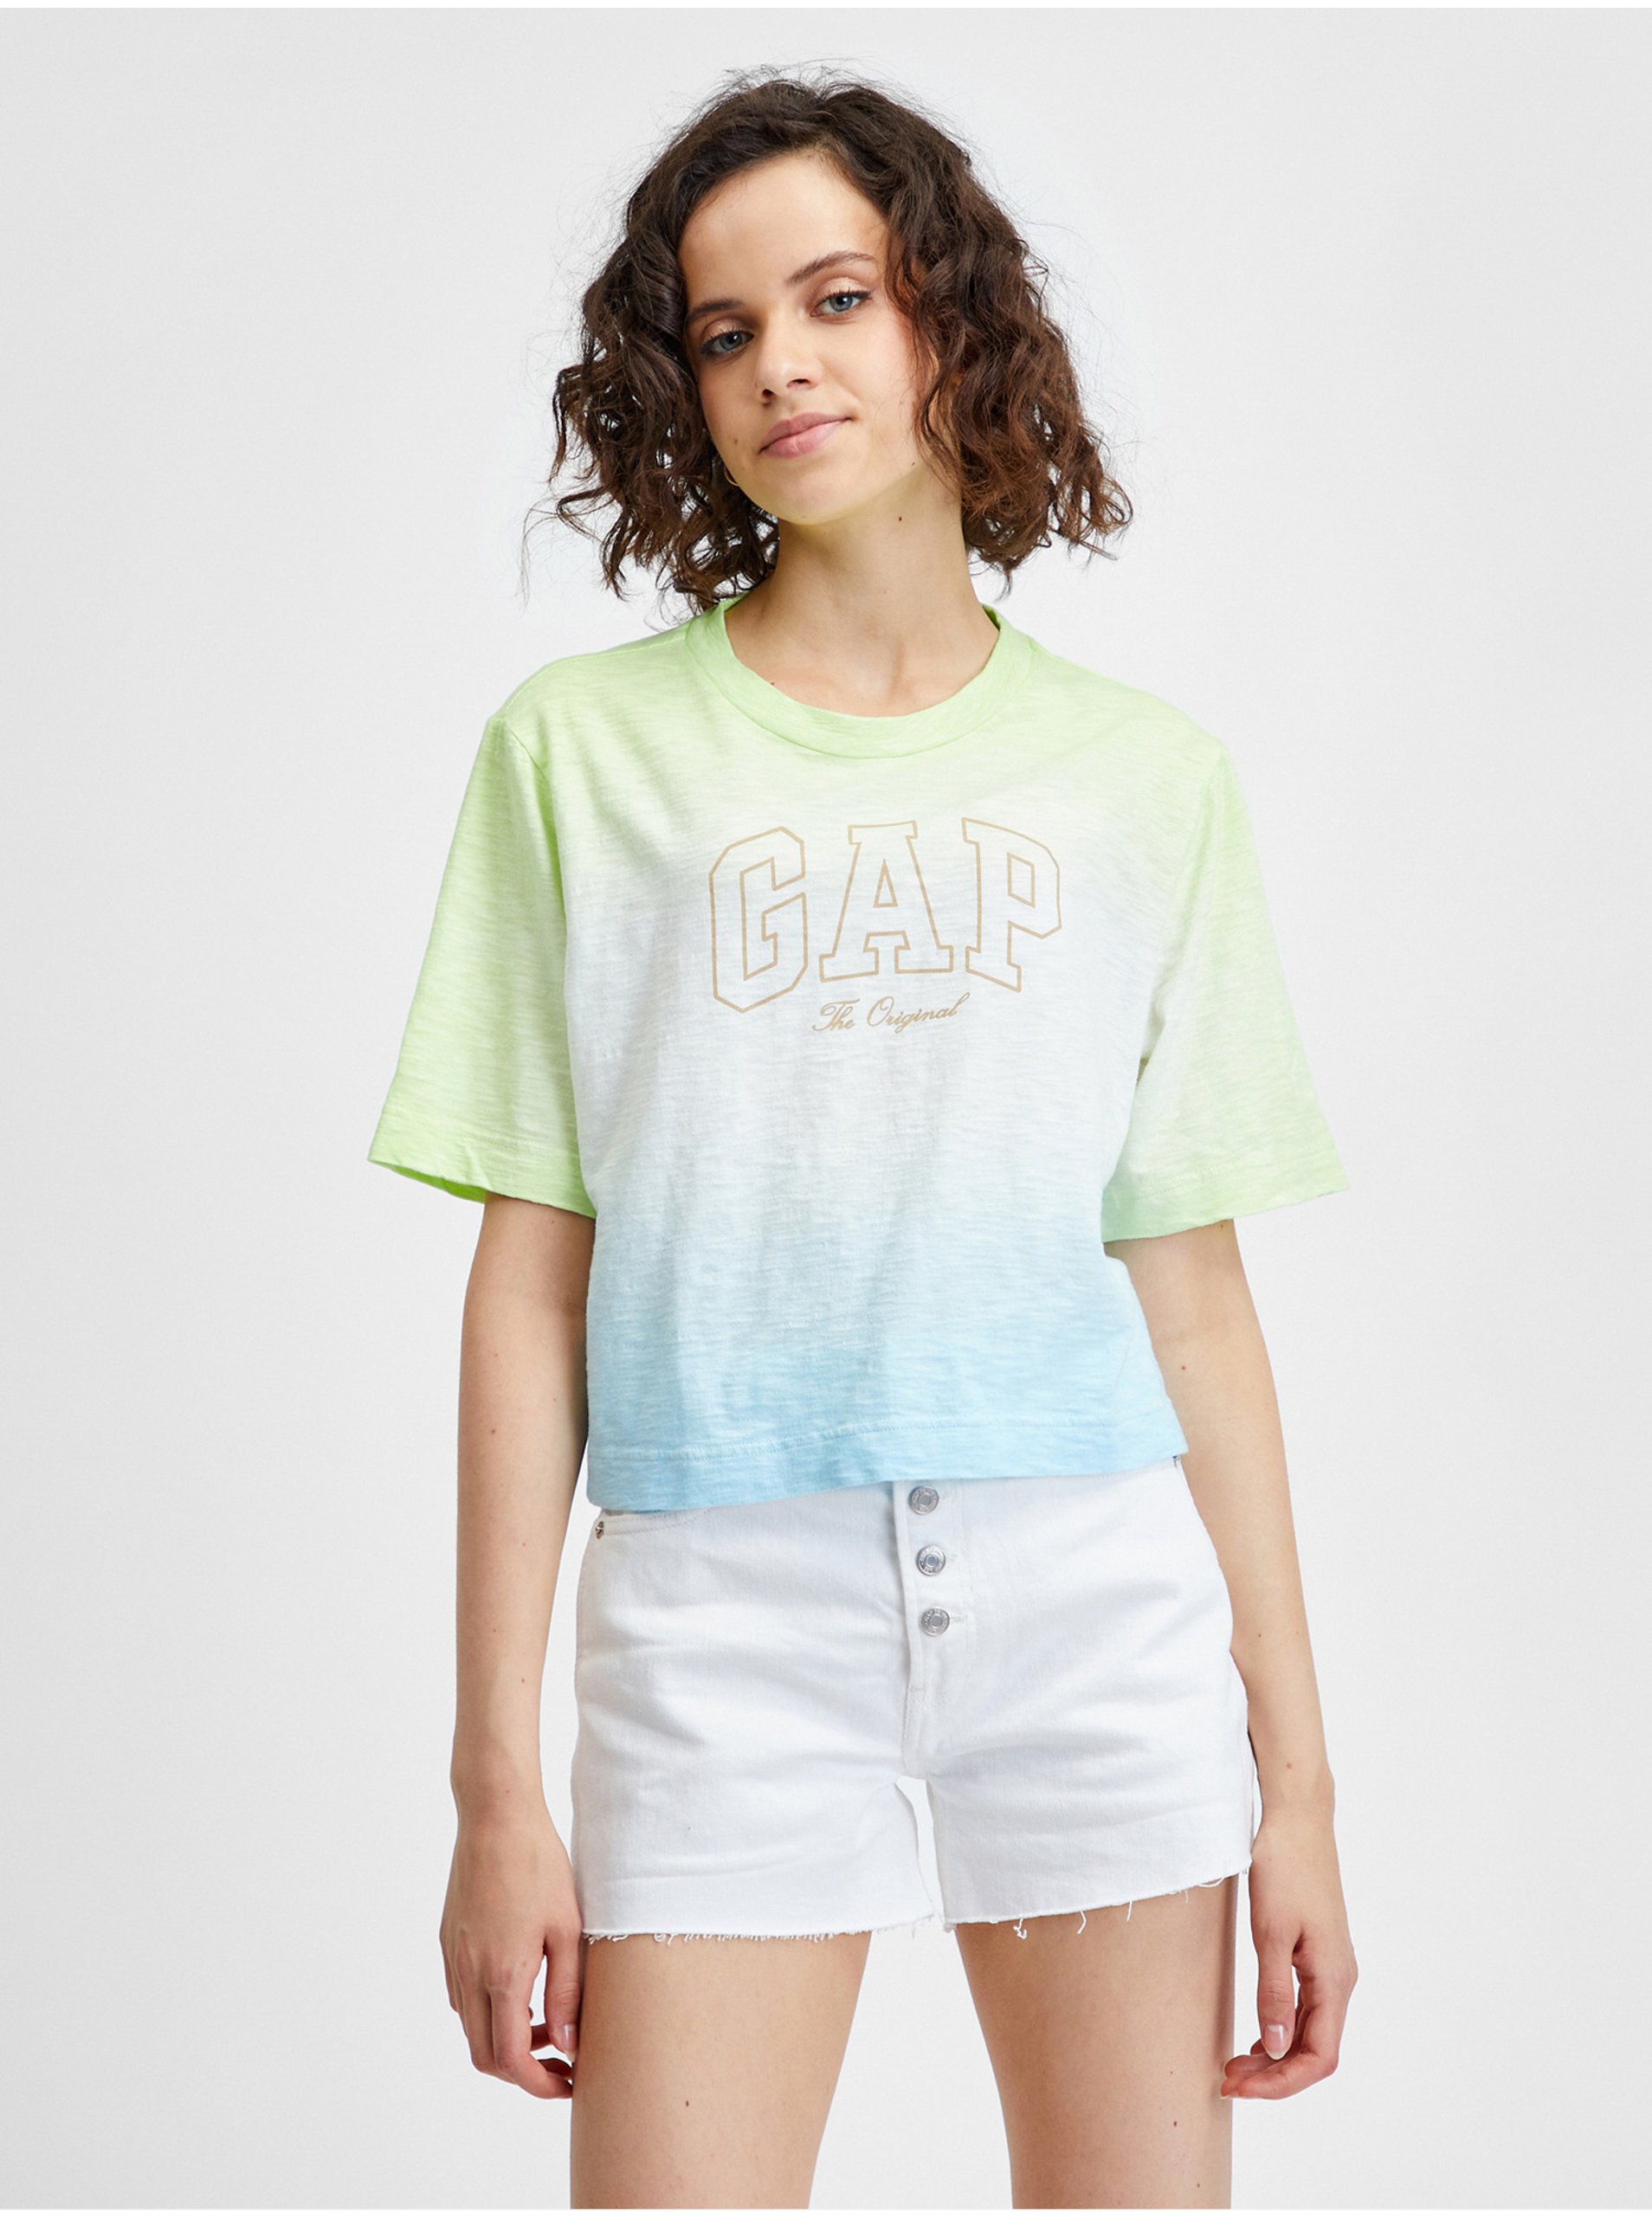 Lacno Modro-zelené dámske tričko s logom GAP